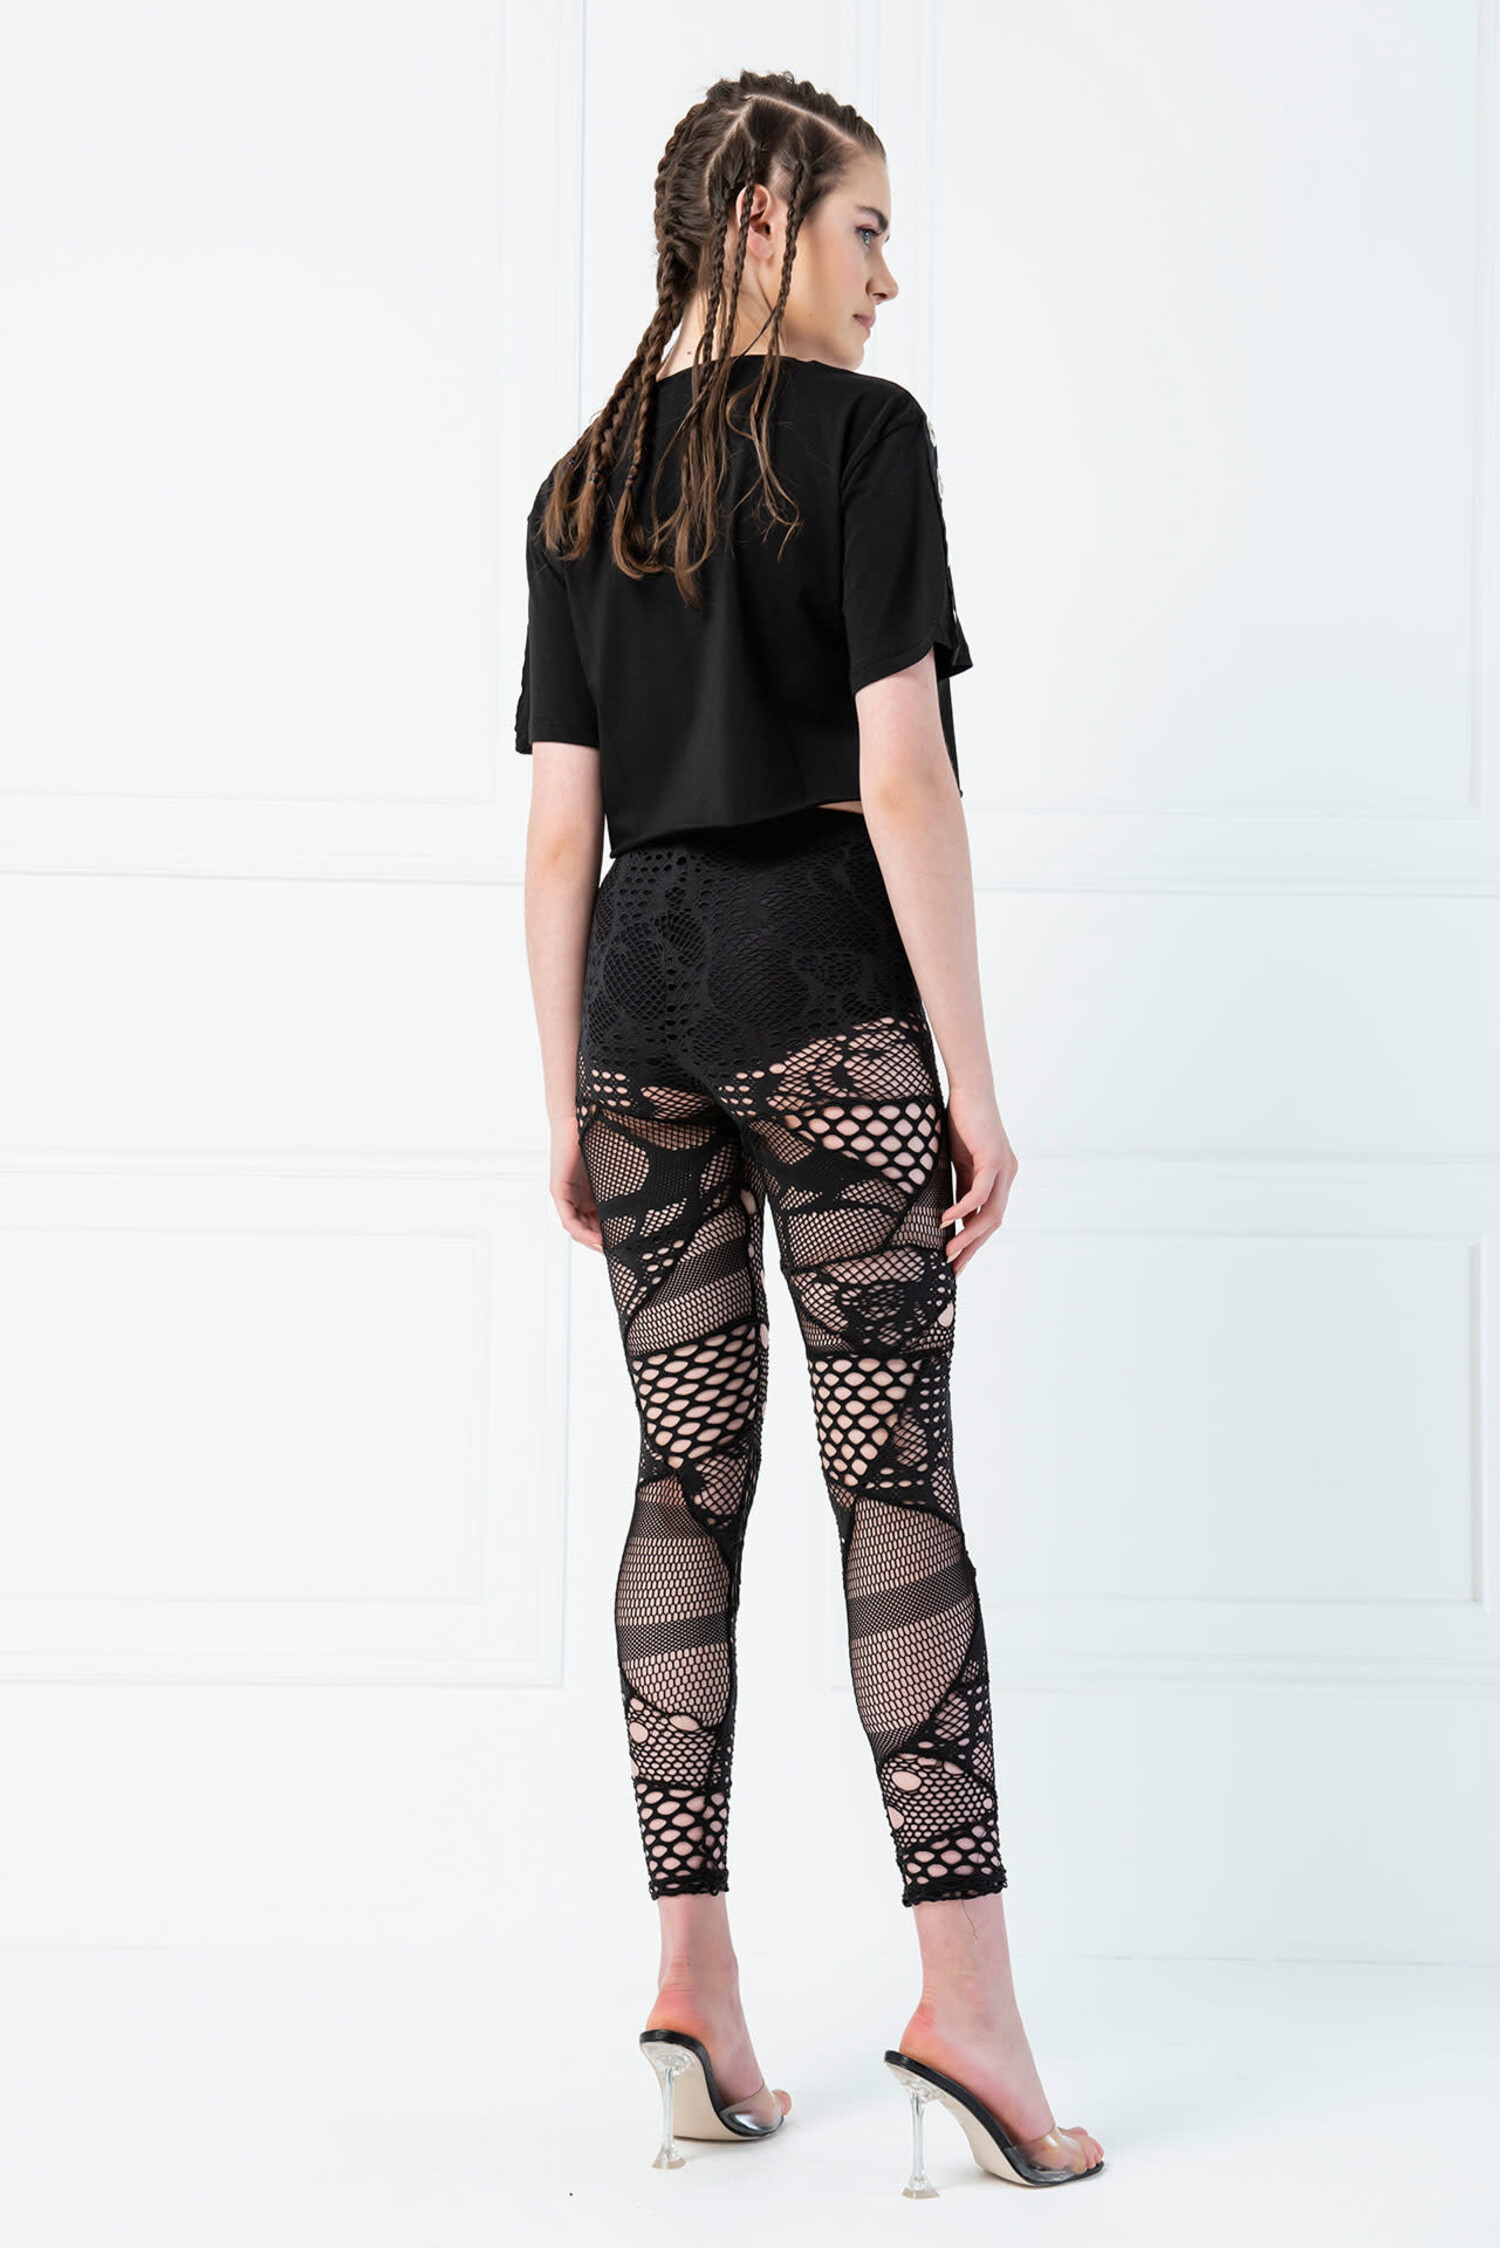 https://cdn.shoplightspeed.com/shops/621347/files/56007054/1500x4000x3/patchwork-design-sheer-black-leggings.jpg